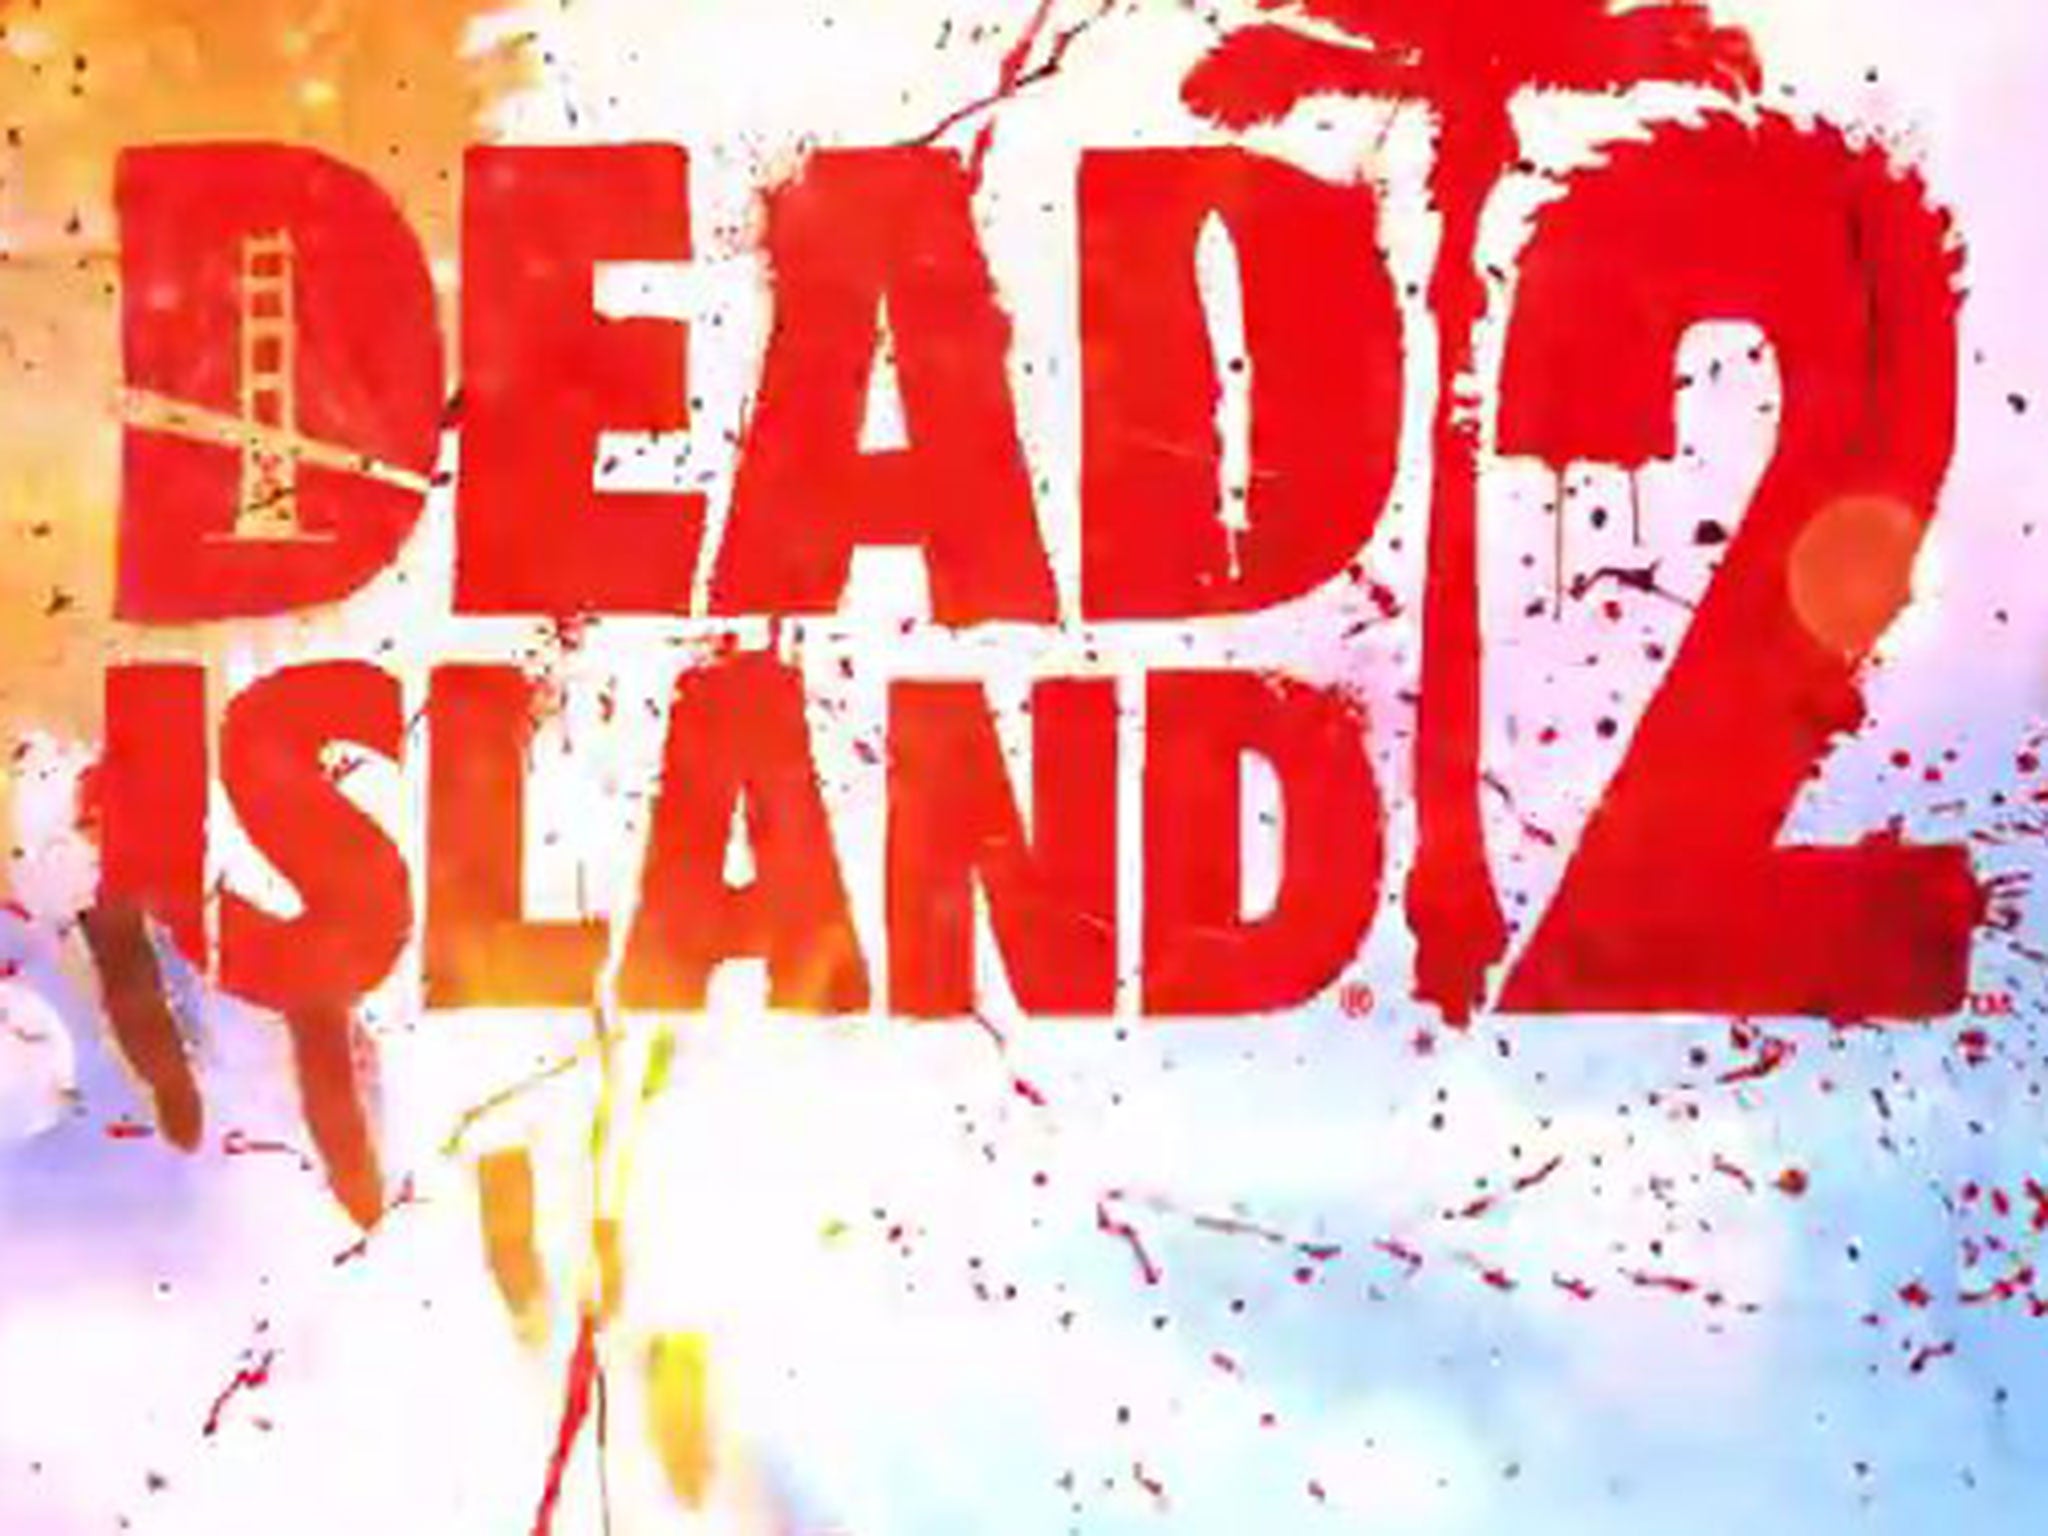 music dead island 2 trailer